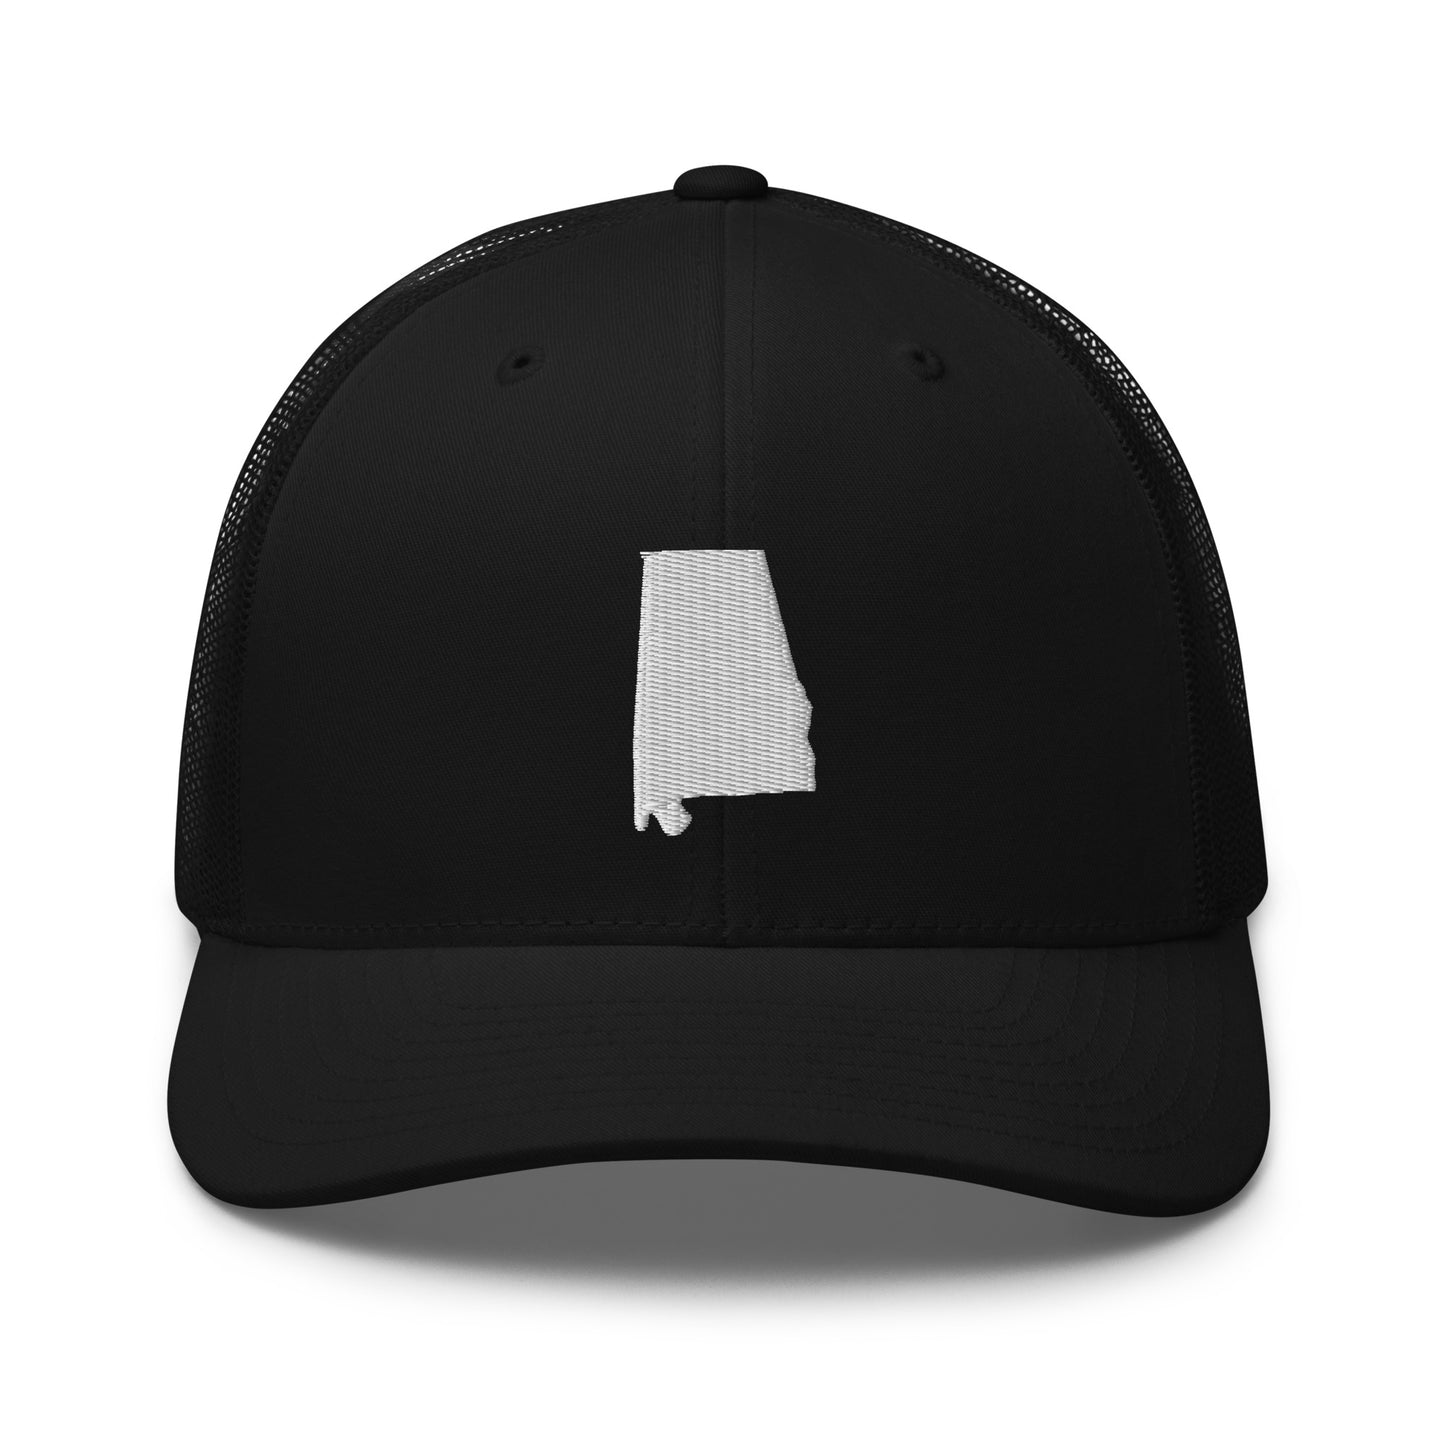 Alabama State Silhouette Mid 6 Panel Snapback Trucker Hat